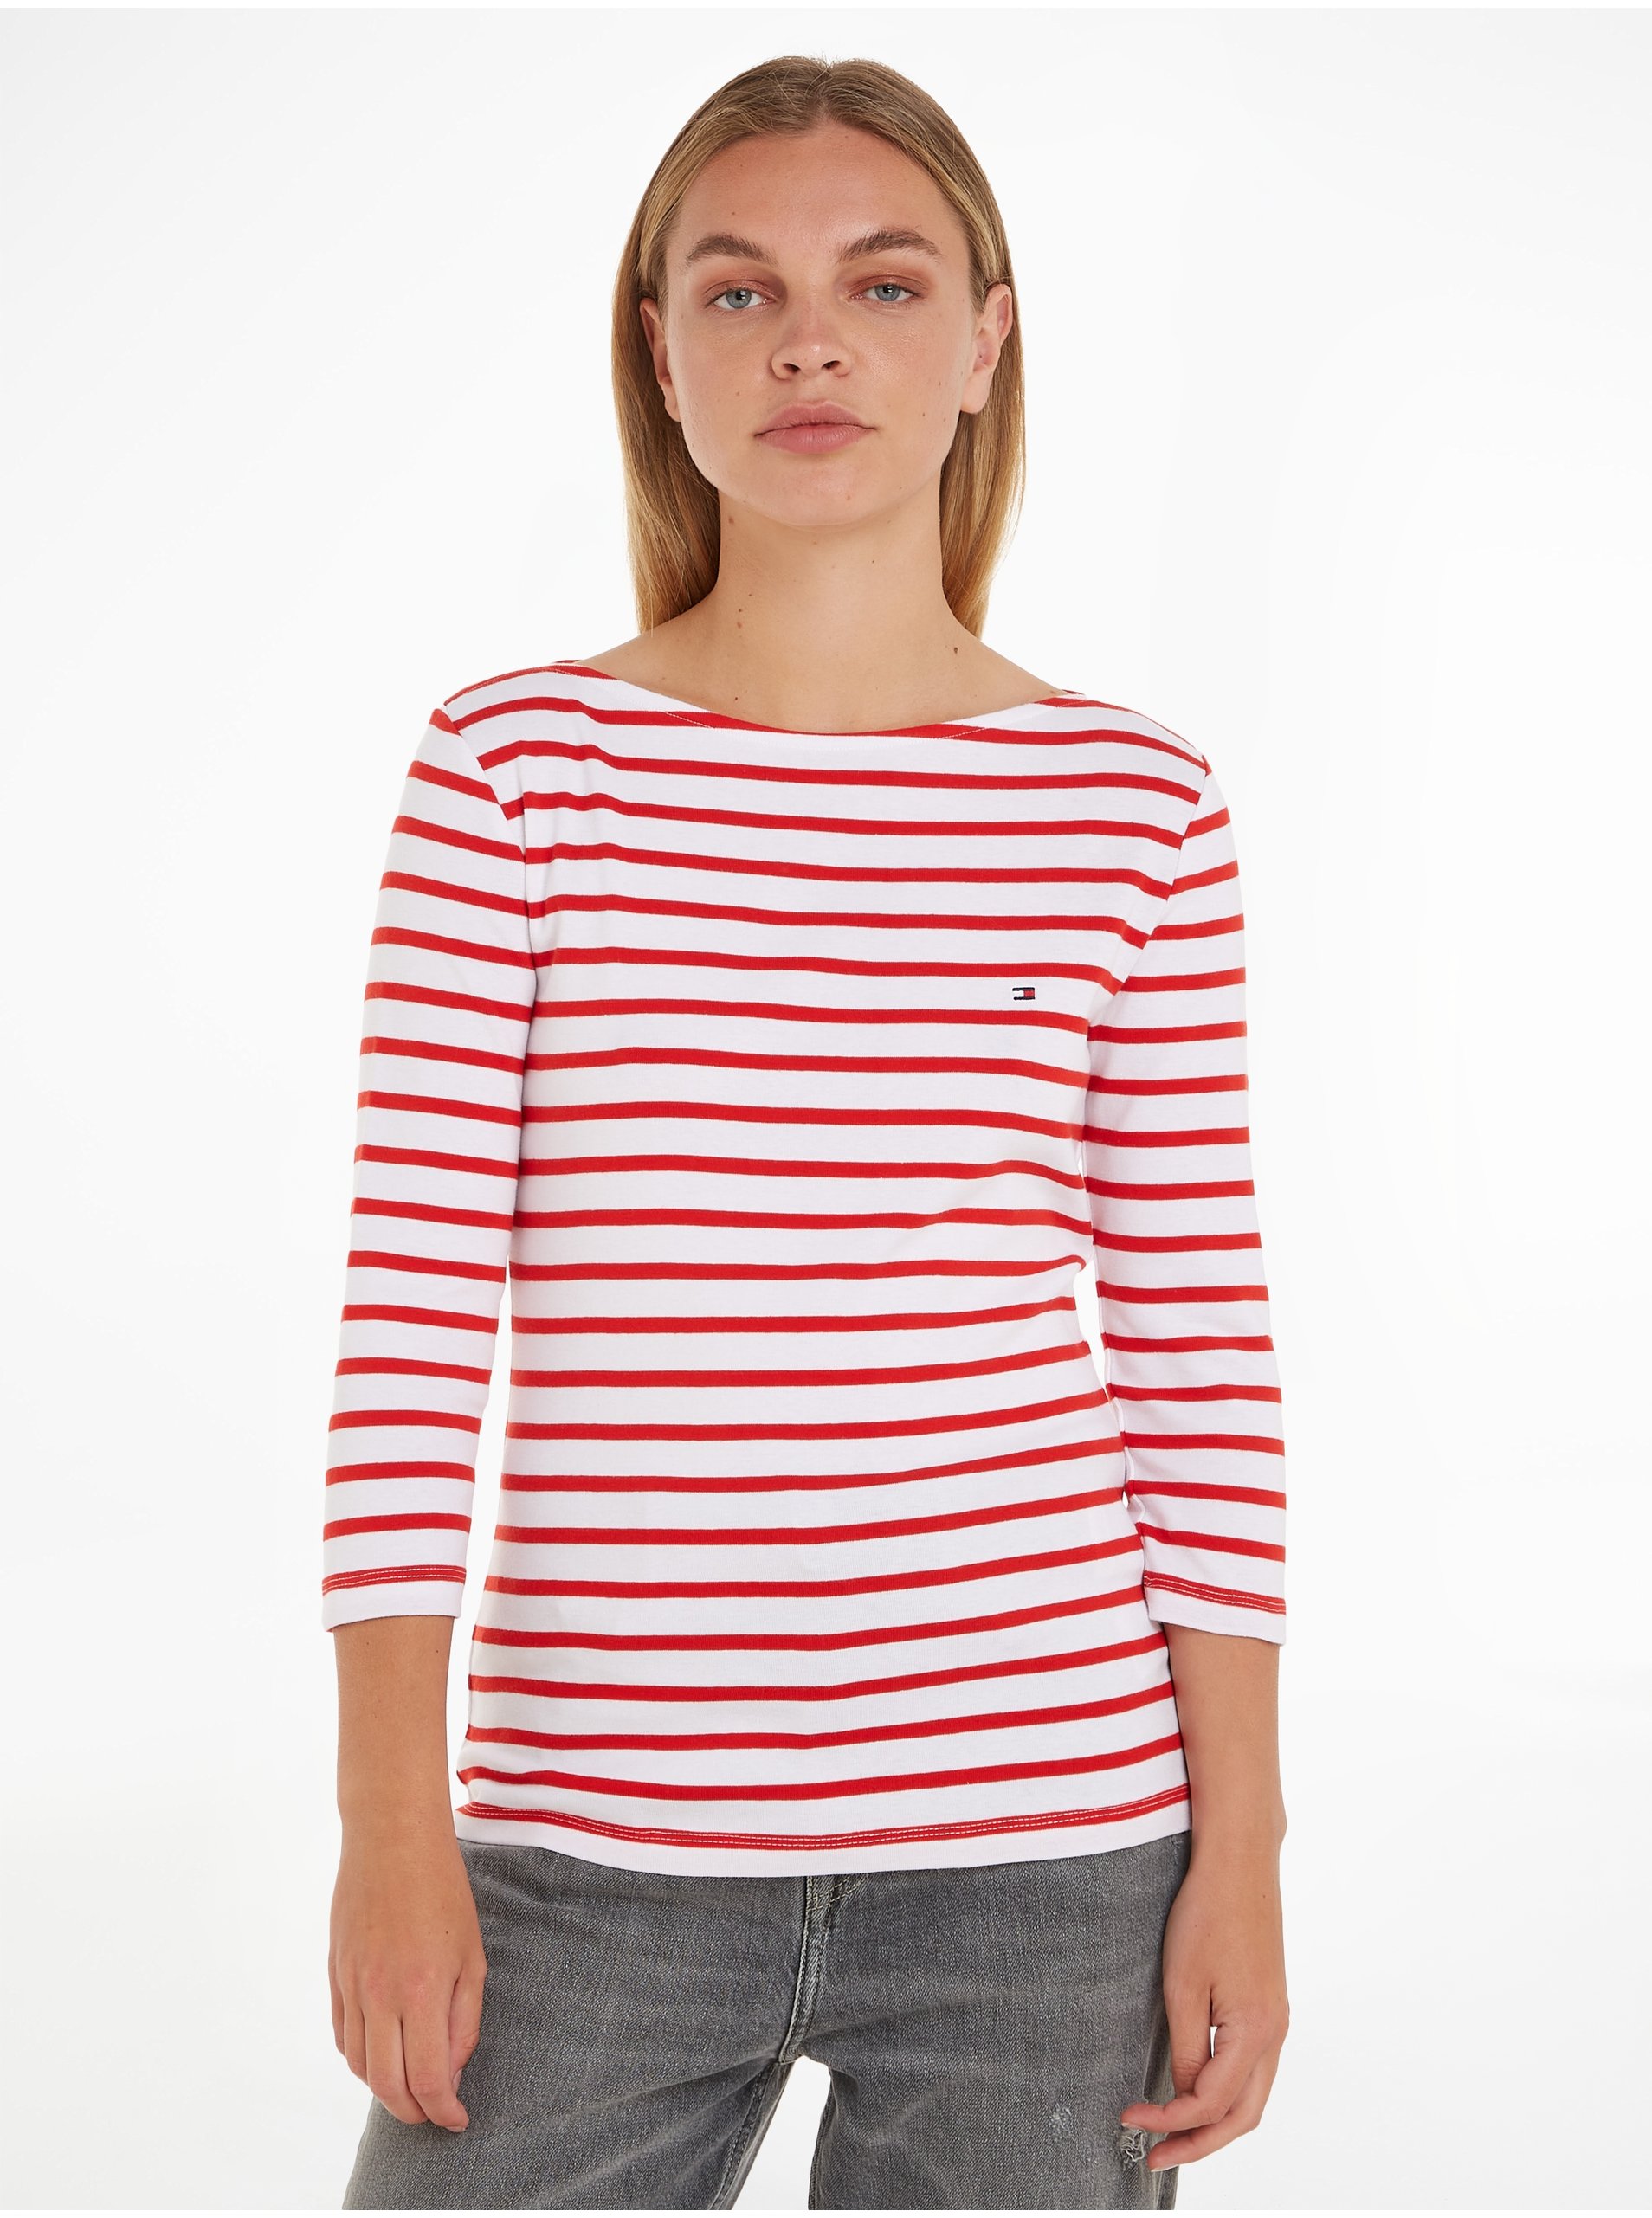 Lacno Bielo-červené dámske pruhované tričko s dlhým rukávom Tommy Hilfiger